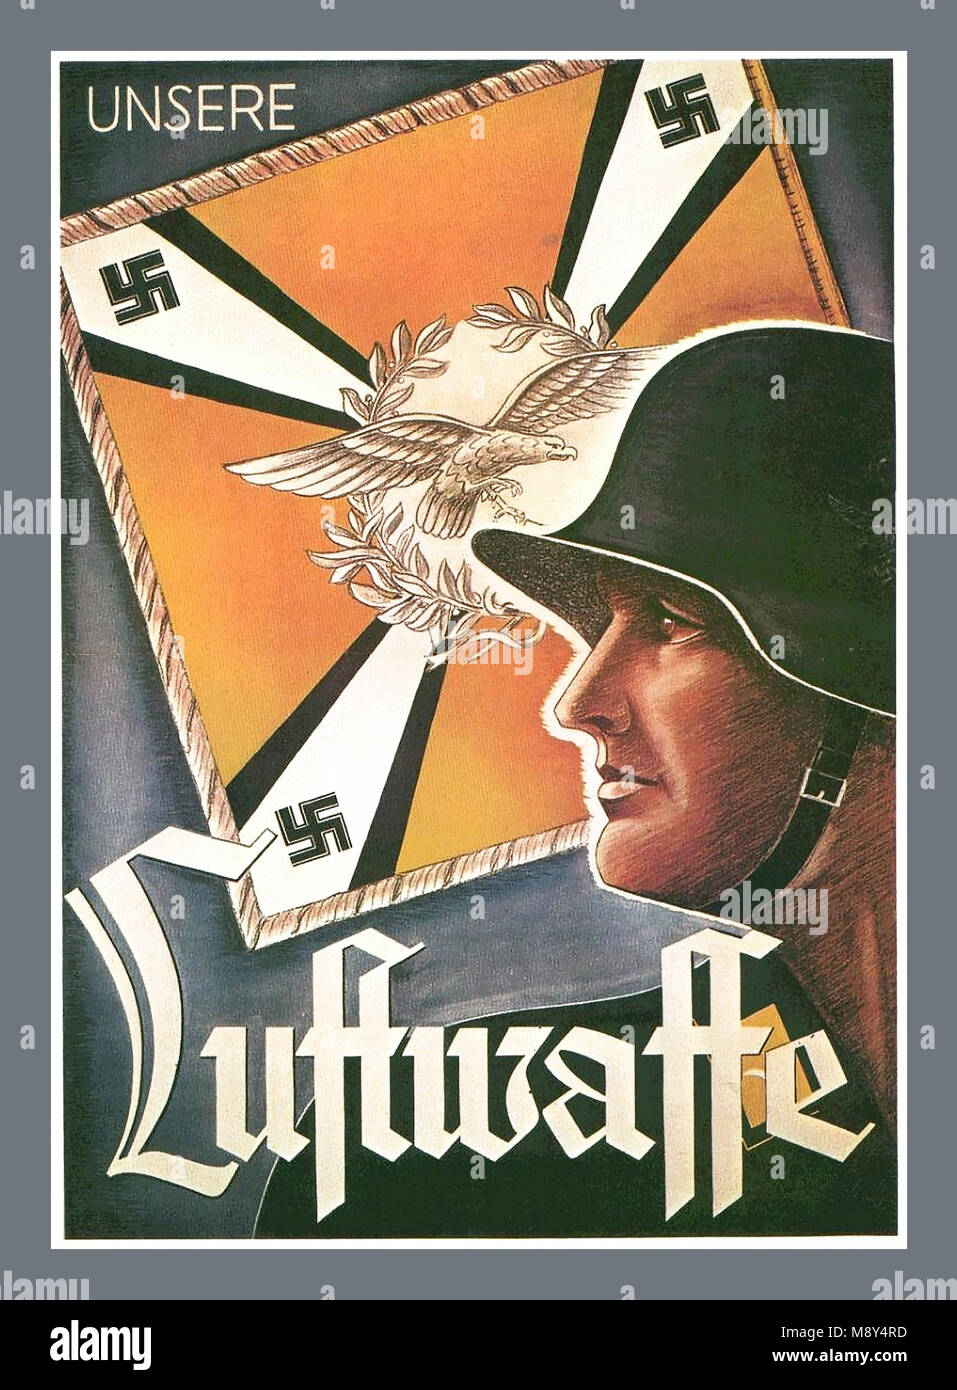 1942 WW2 Nazi Germany Propaganda Poster ‘Our Luftwaffe’ ceremonial flag with Luftwaffe flying eagle emblem and swastikas Stock Photo